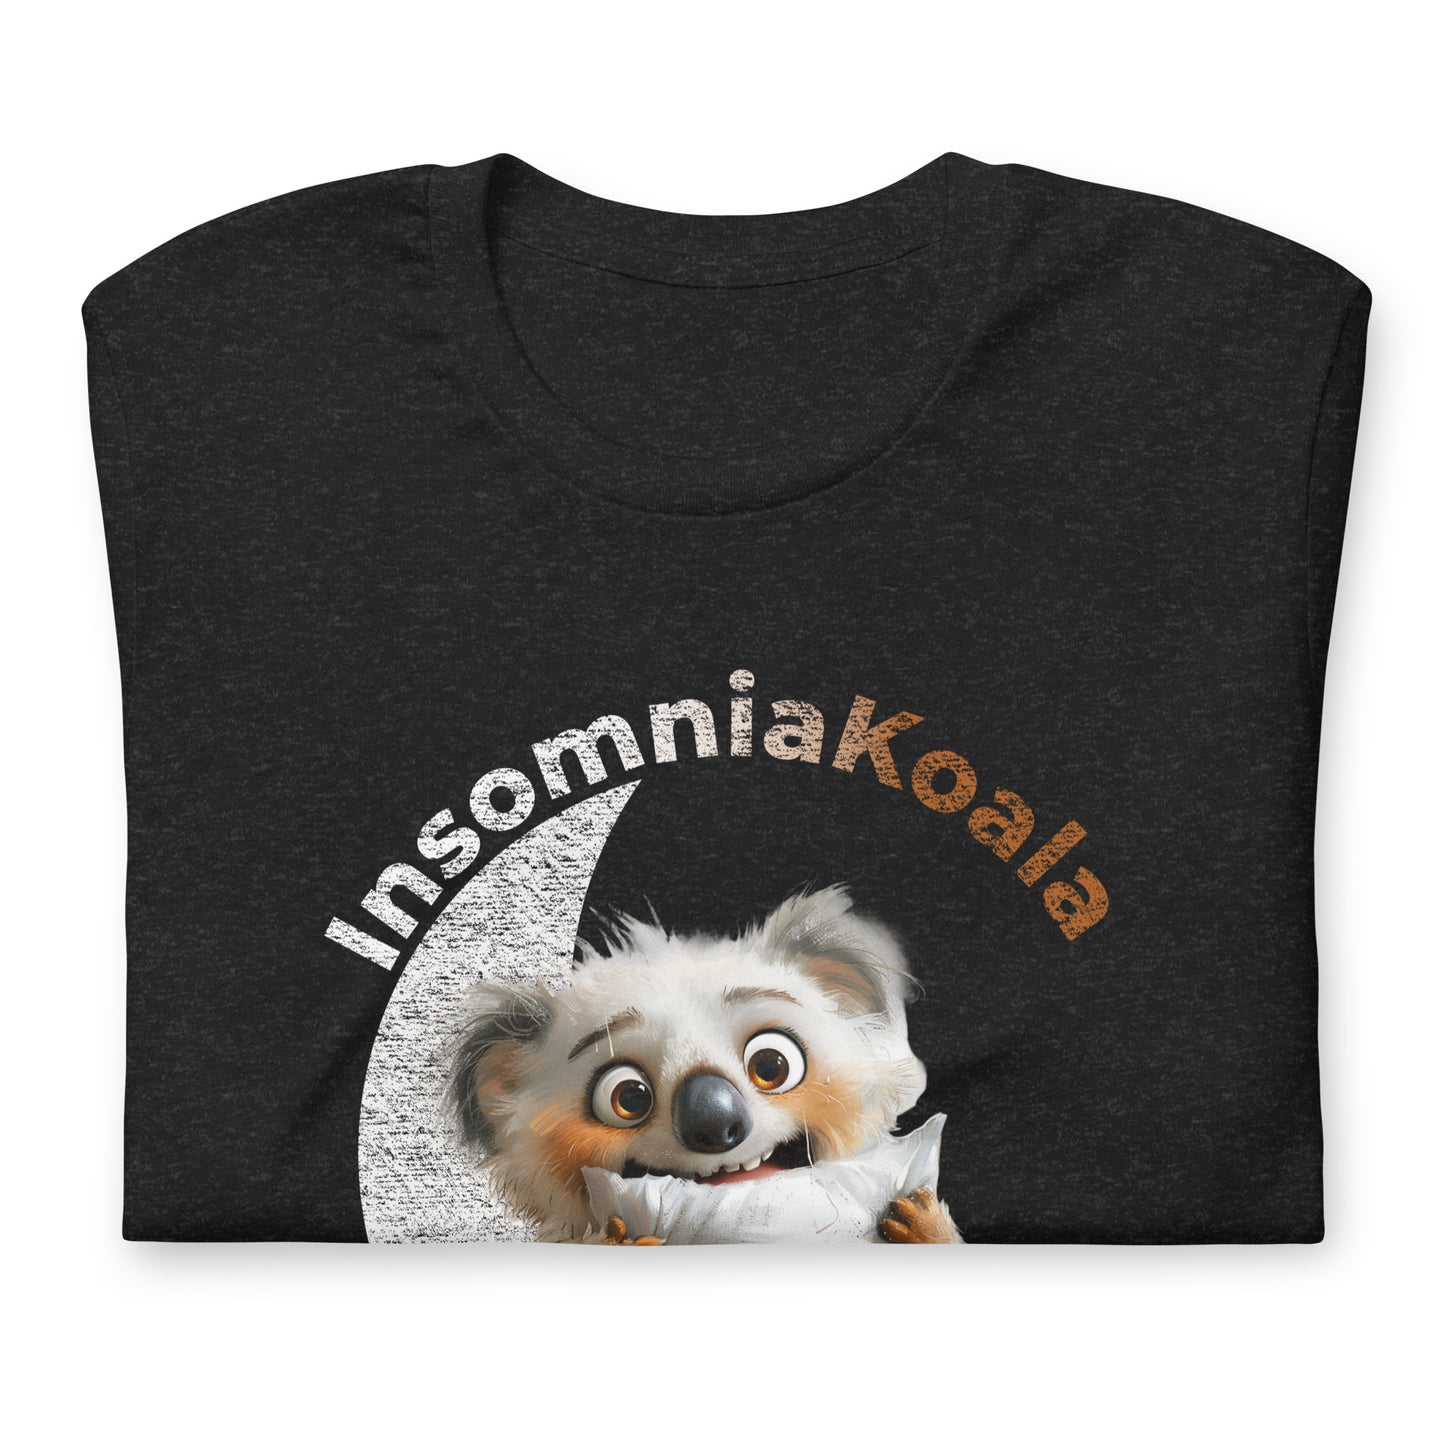 InsomniaKoala, Insomniac Koala, Insomnia, Animals, Sleep Disorders, Graphic Tee Shirt, Black